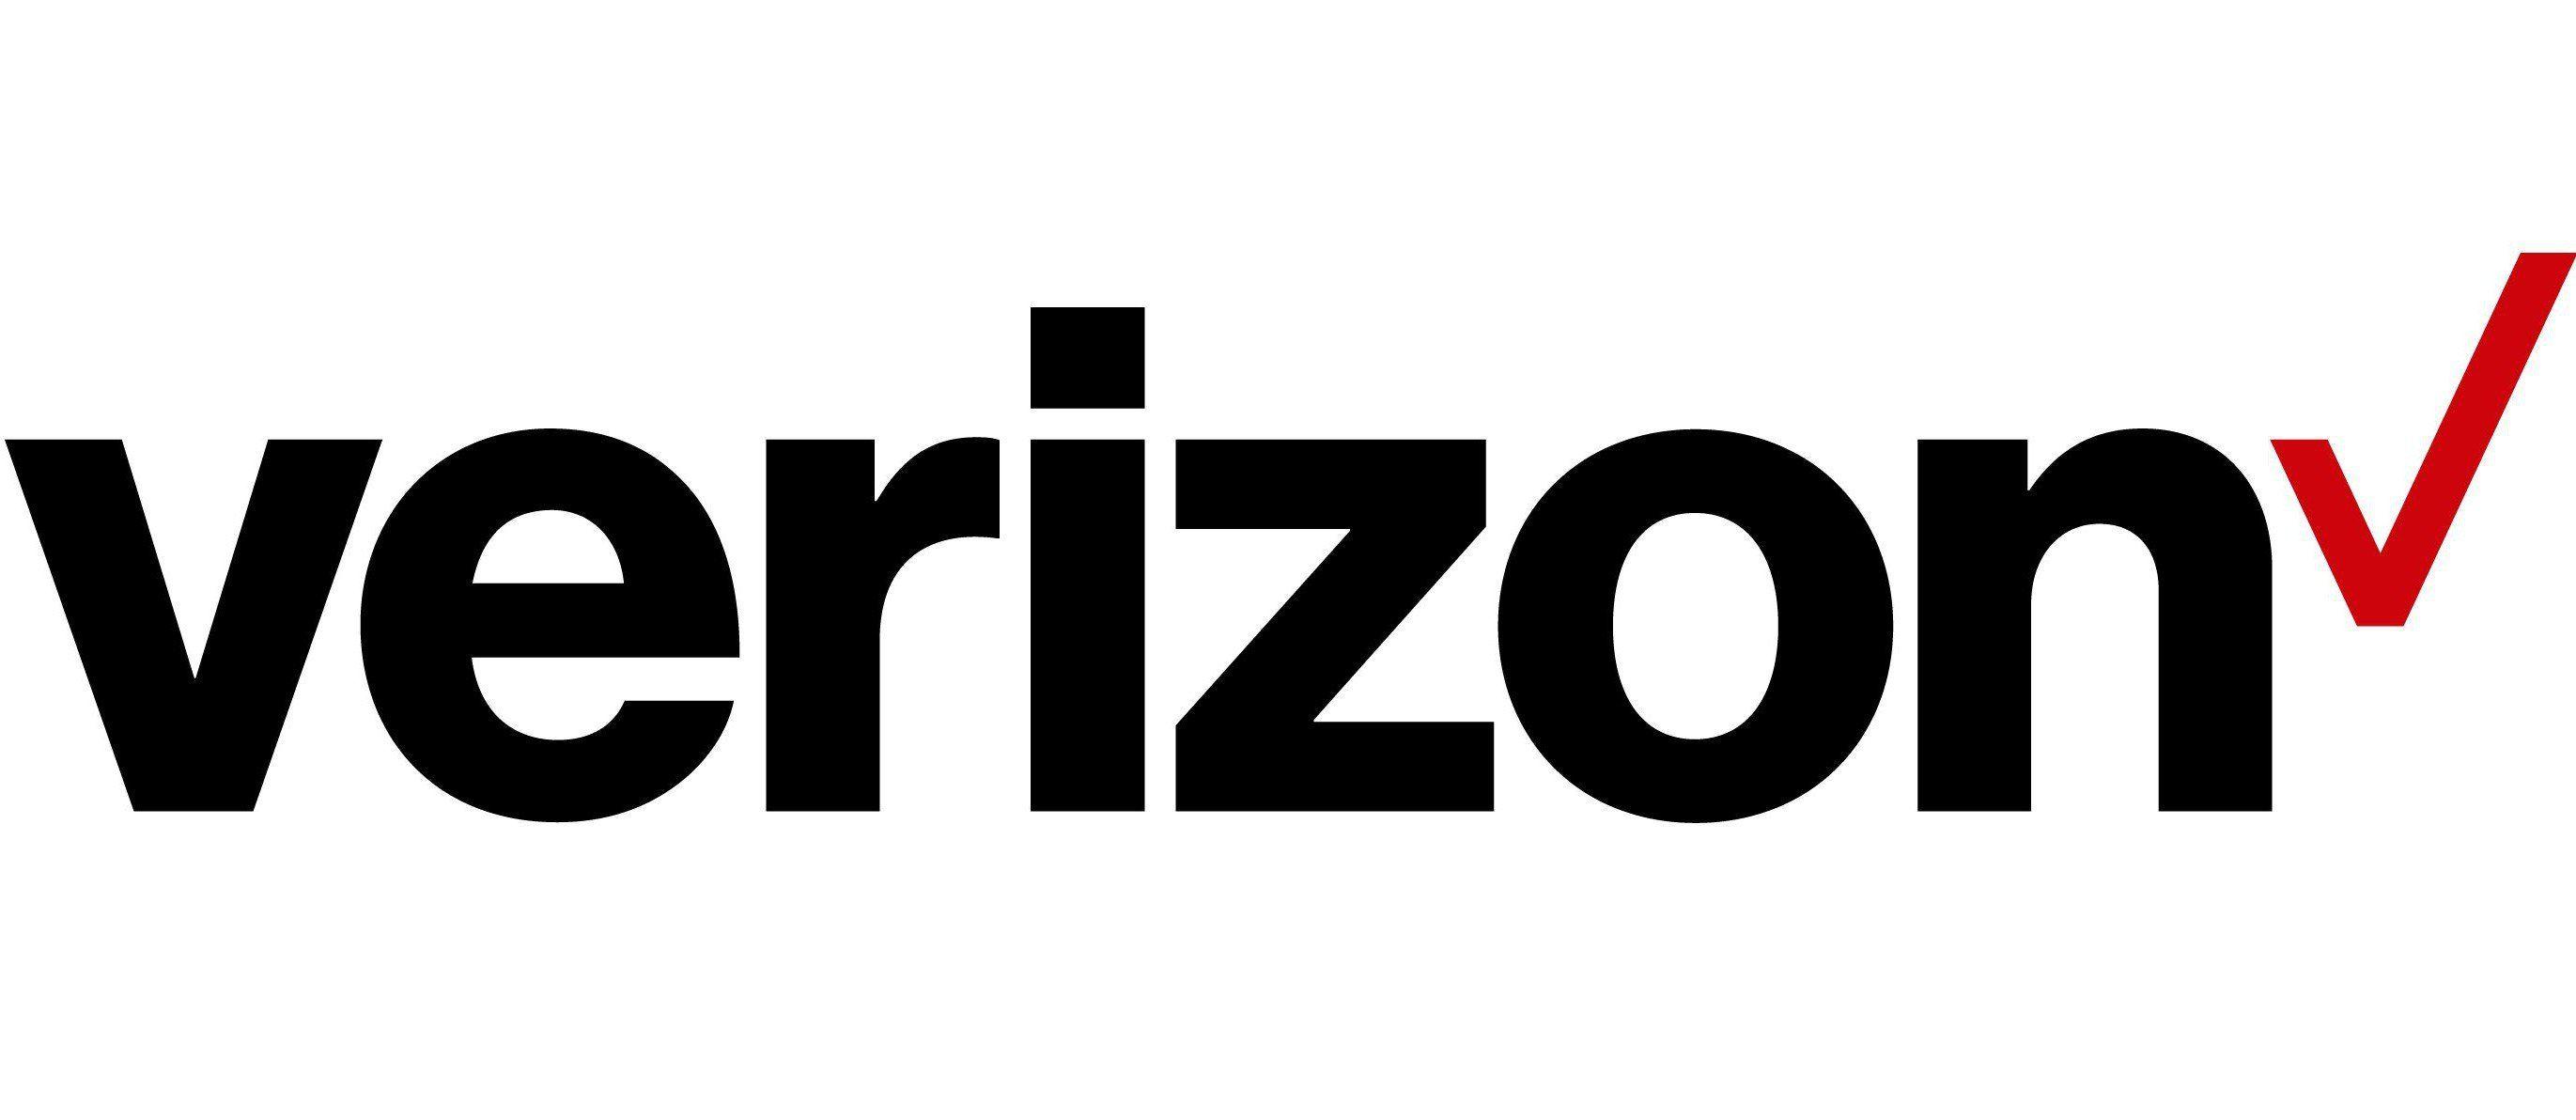 Verison Logo - T-Mobile CEO mocks new Verizon logo | KFOR.com